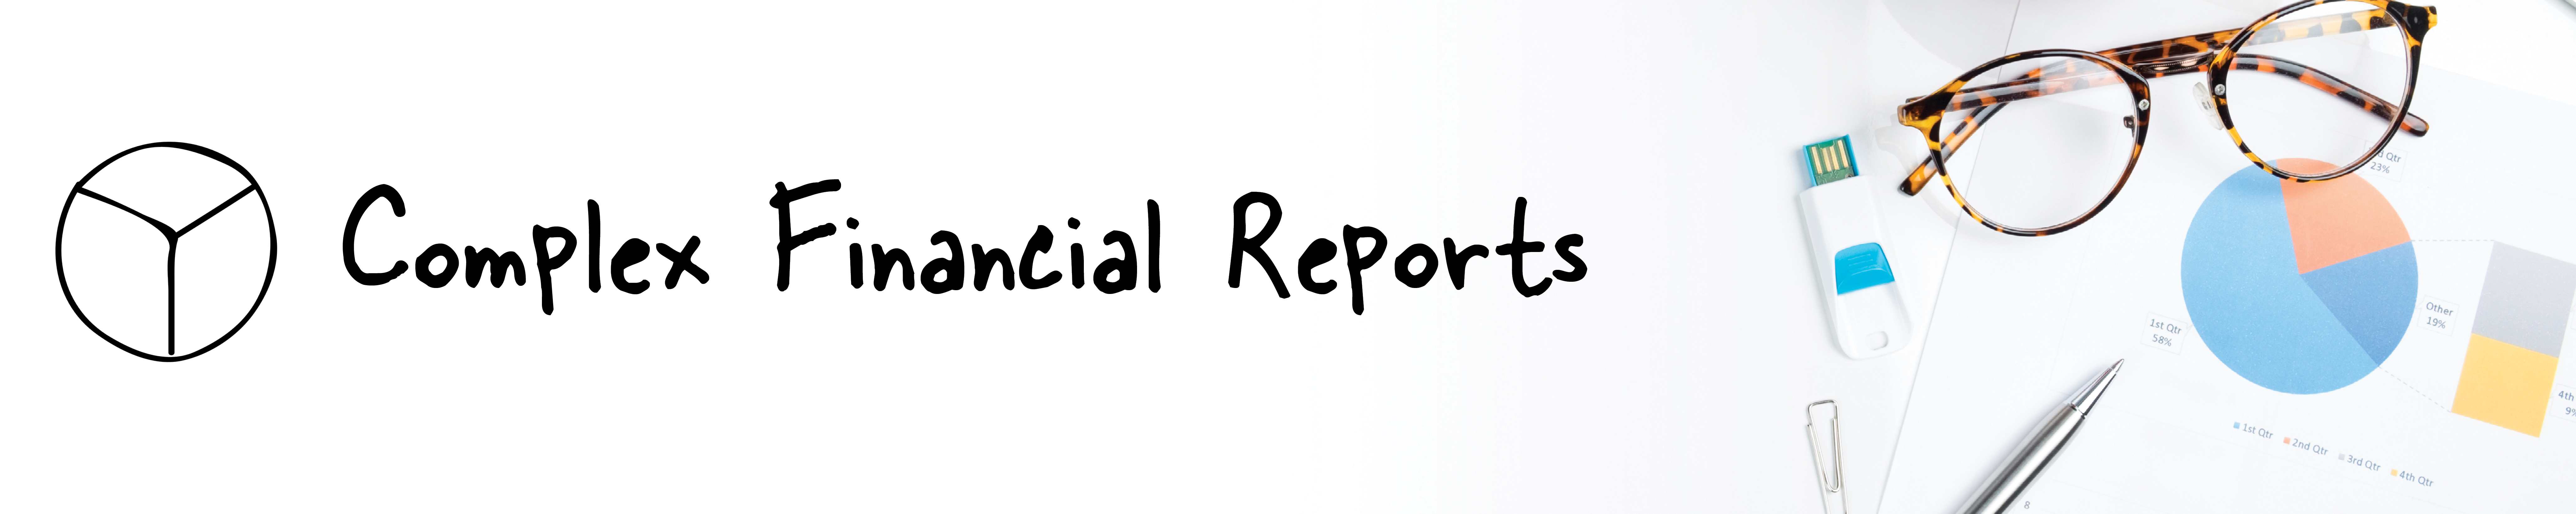 Complex Financial Reports